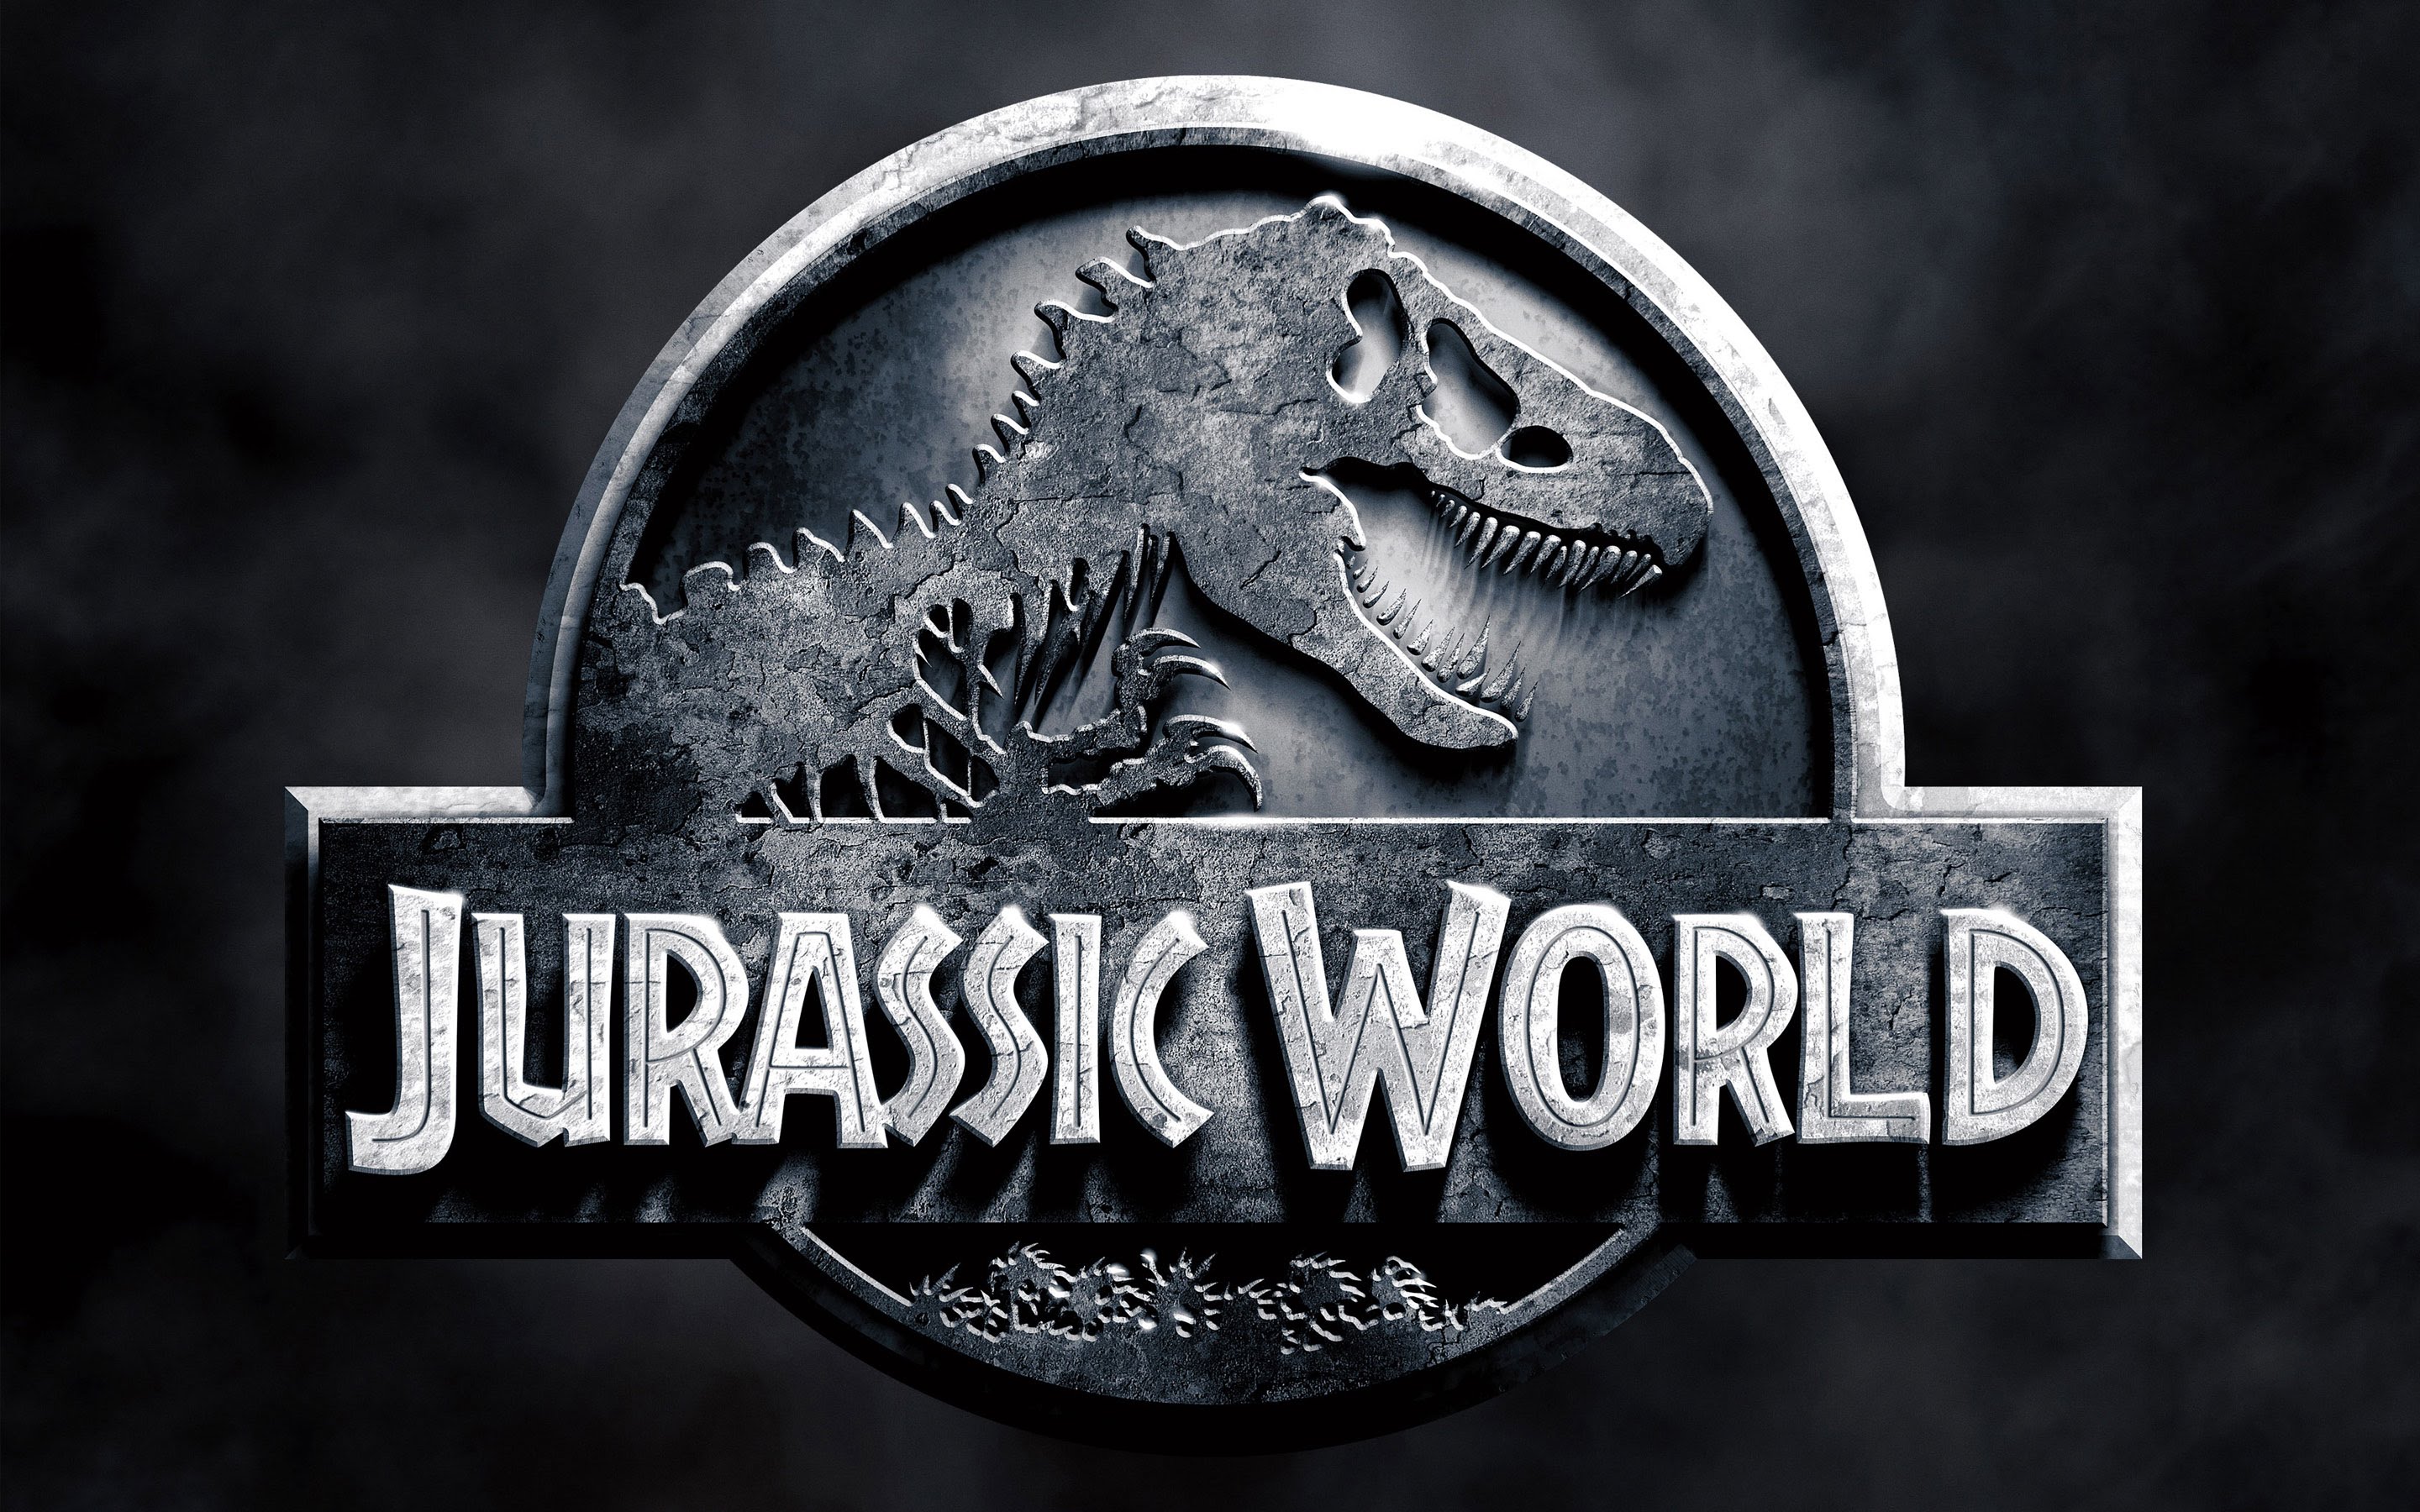 Jurassic World 3D Blu-ray Only $13.95!